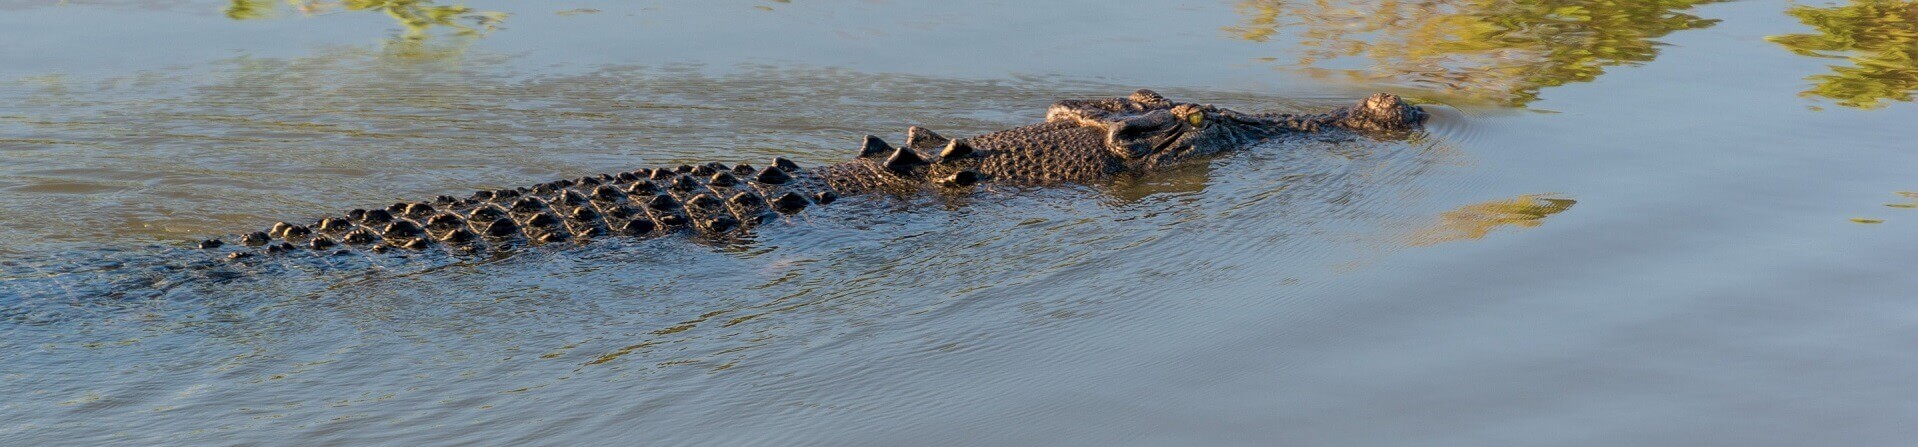 Morning Jumping Crocodile Cruise from Darwin 5